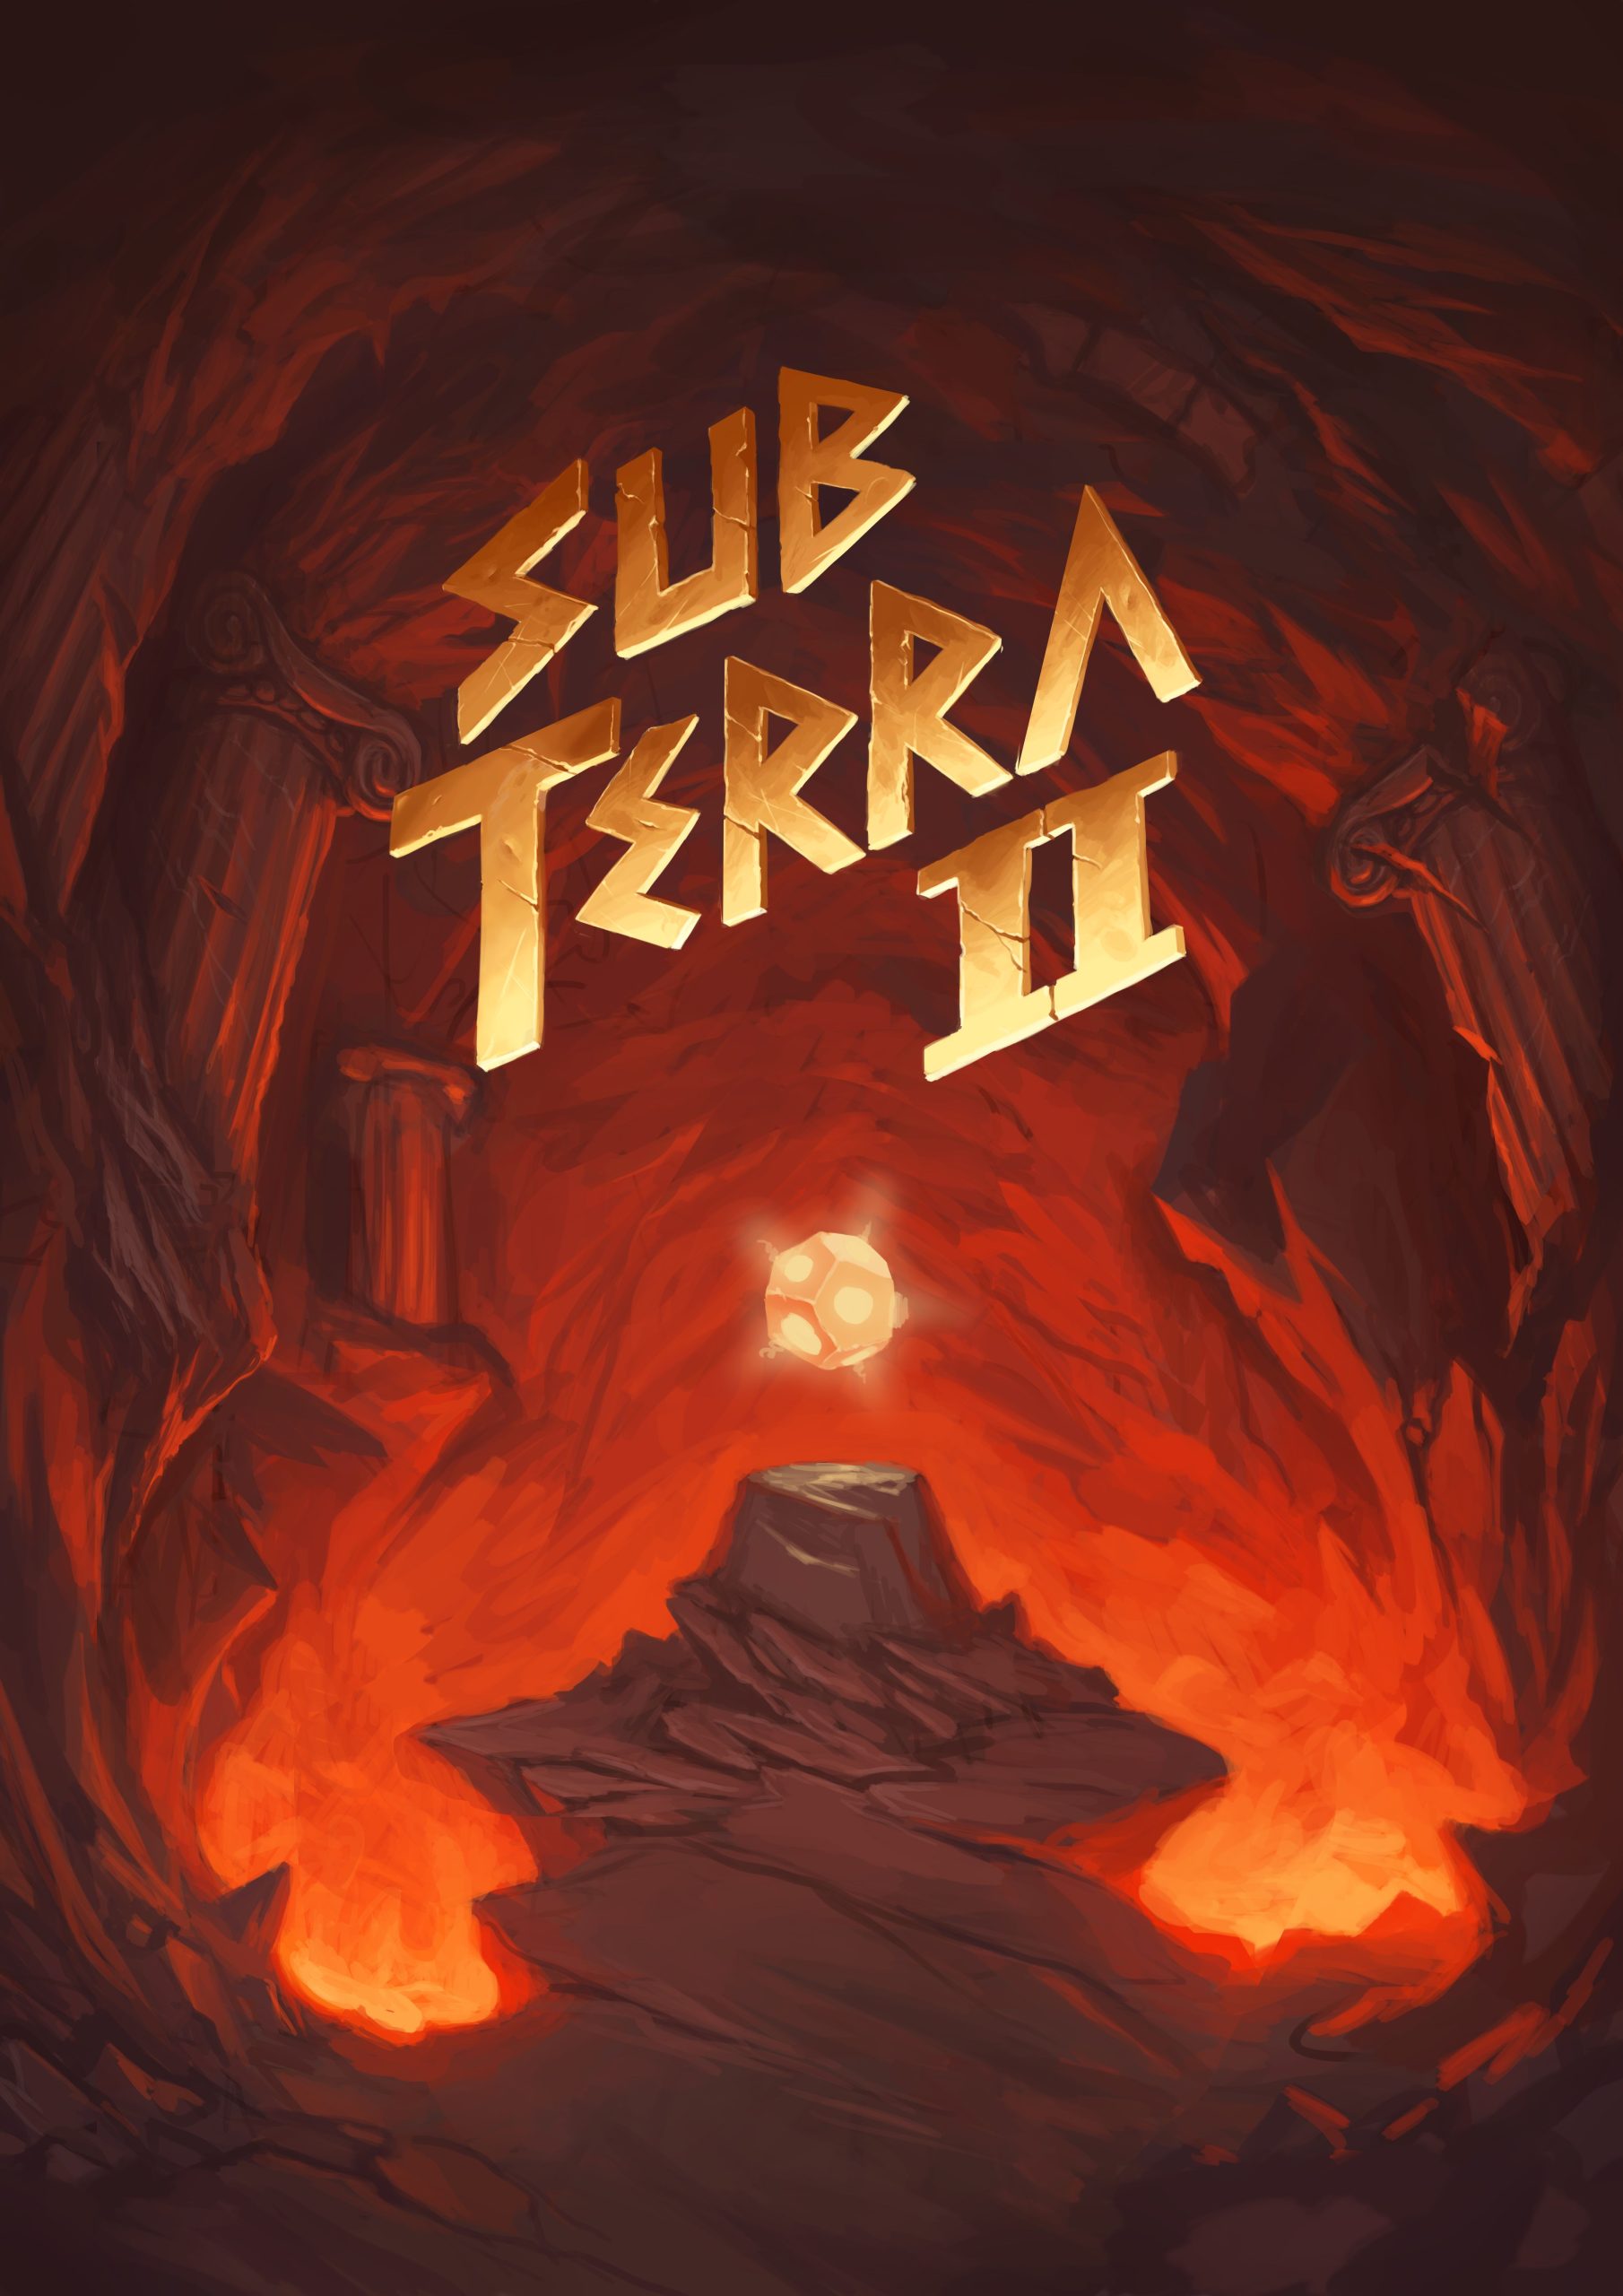 Inside the Box Games Sub Terra II: Inferno's Edge